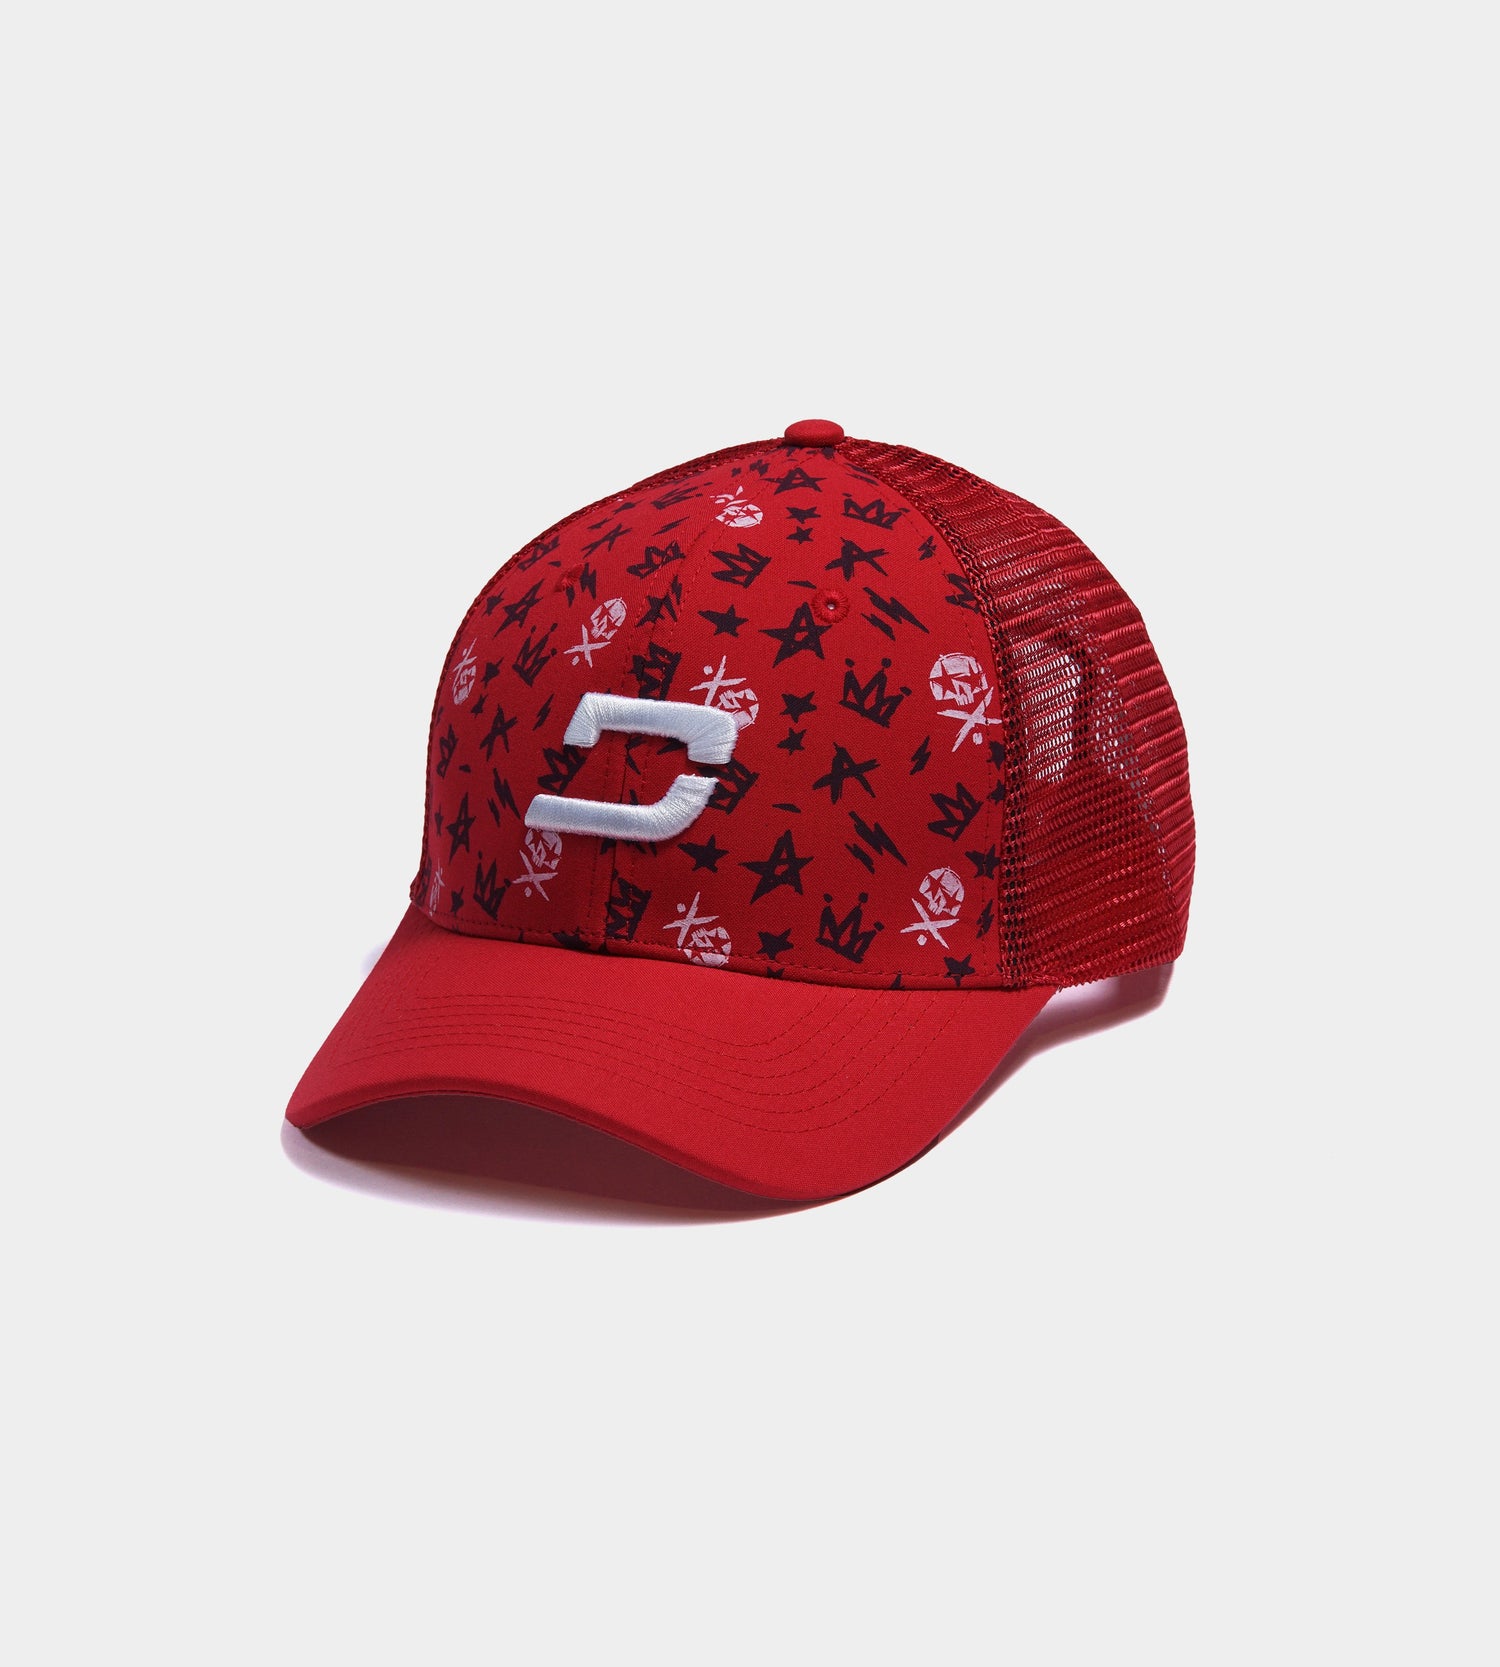 GRUNGE SKULLZ CAP - RED - DRUIDS